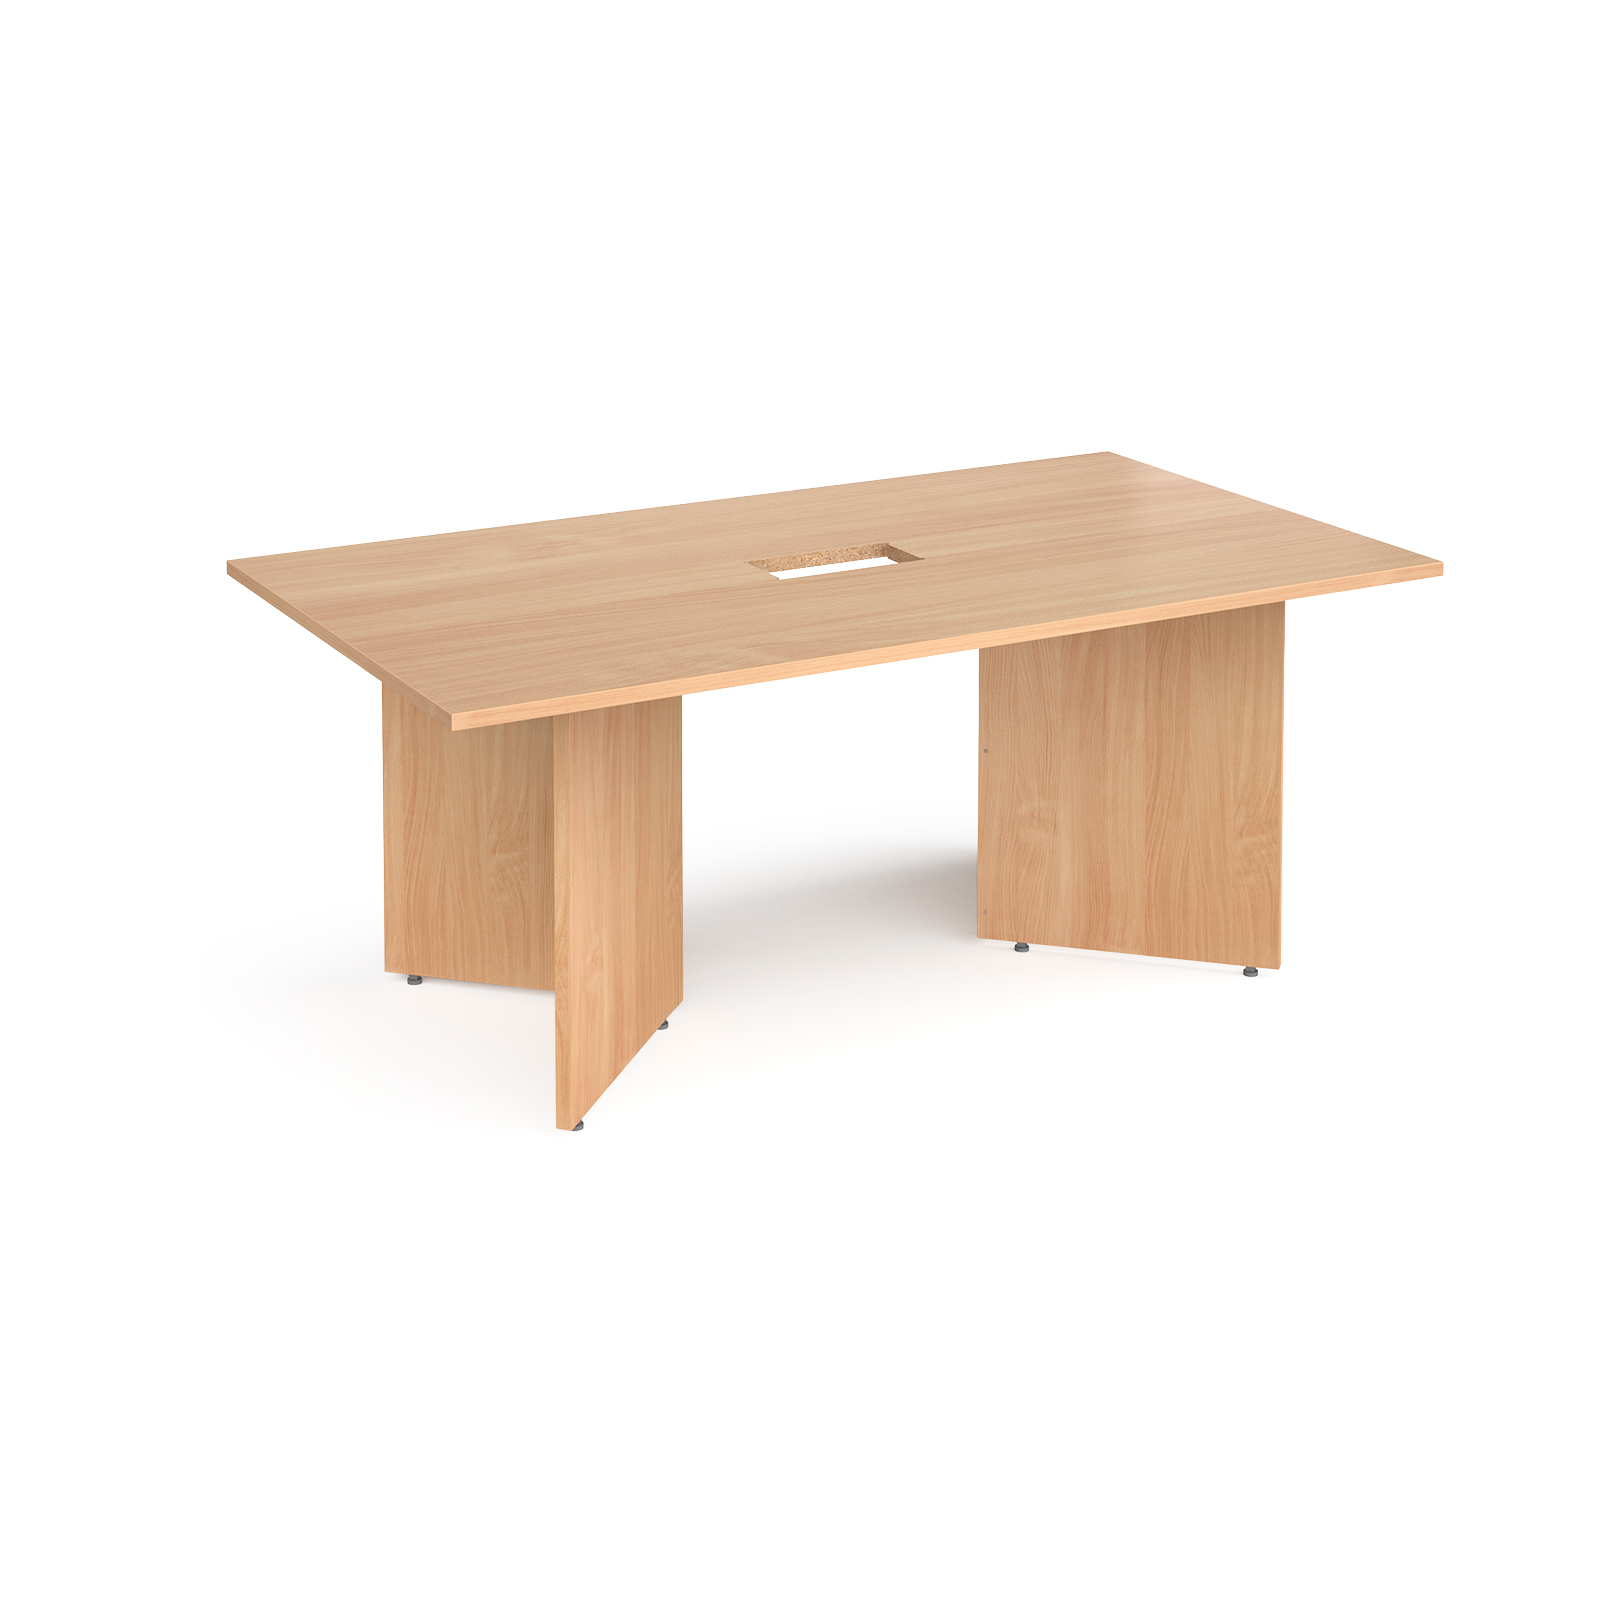 Arrow head leg rectangular boardroom table 1800mm x 1000mm with central cutout 272mm x 132mm - beech